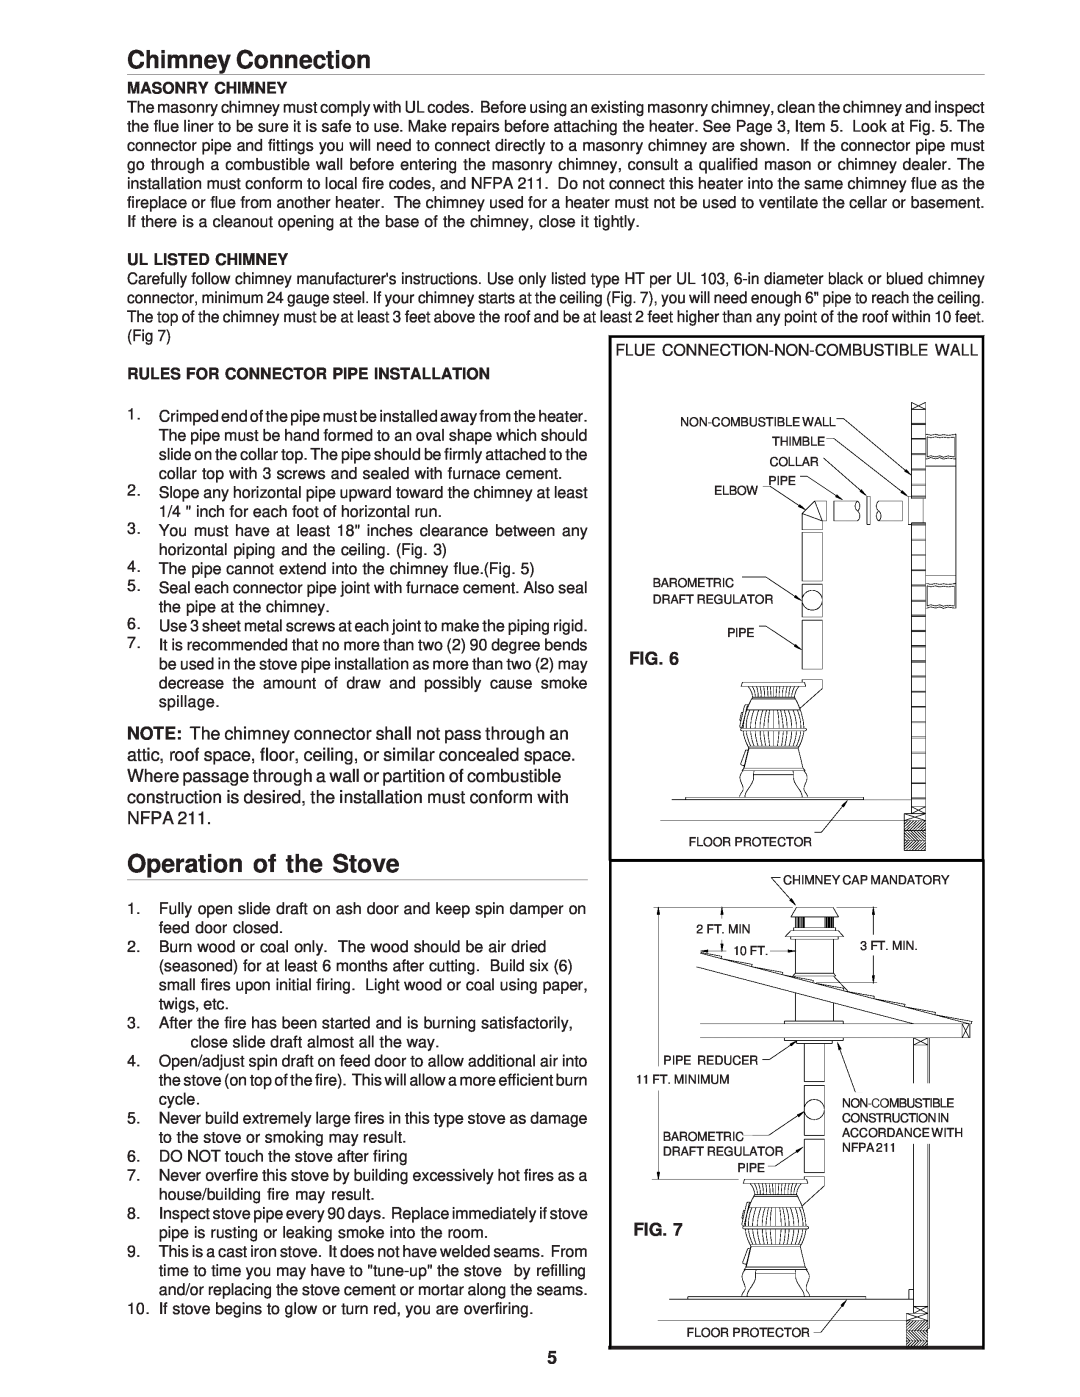 United States Stove CSSU owner manual Chimney Connection, Operation of the Stove, Masonry Chimney, Ul Listed Chimney 